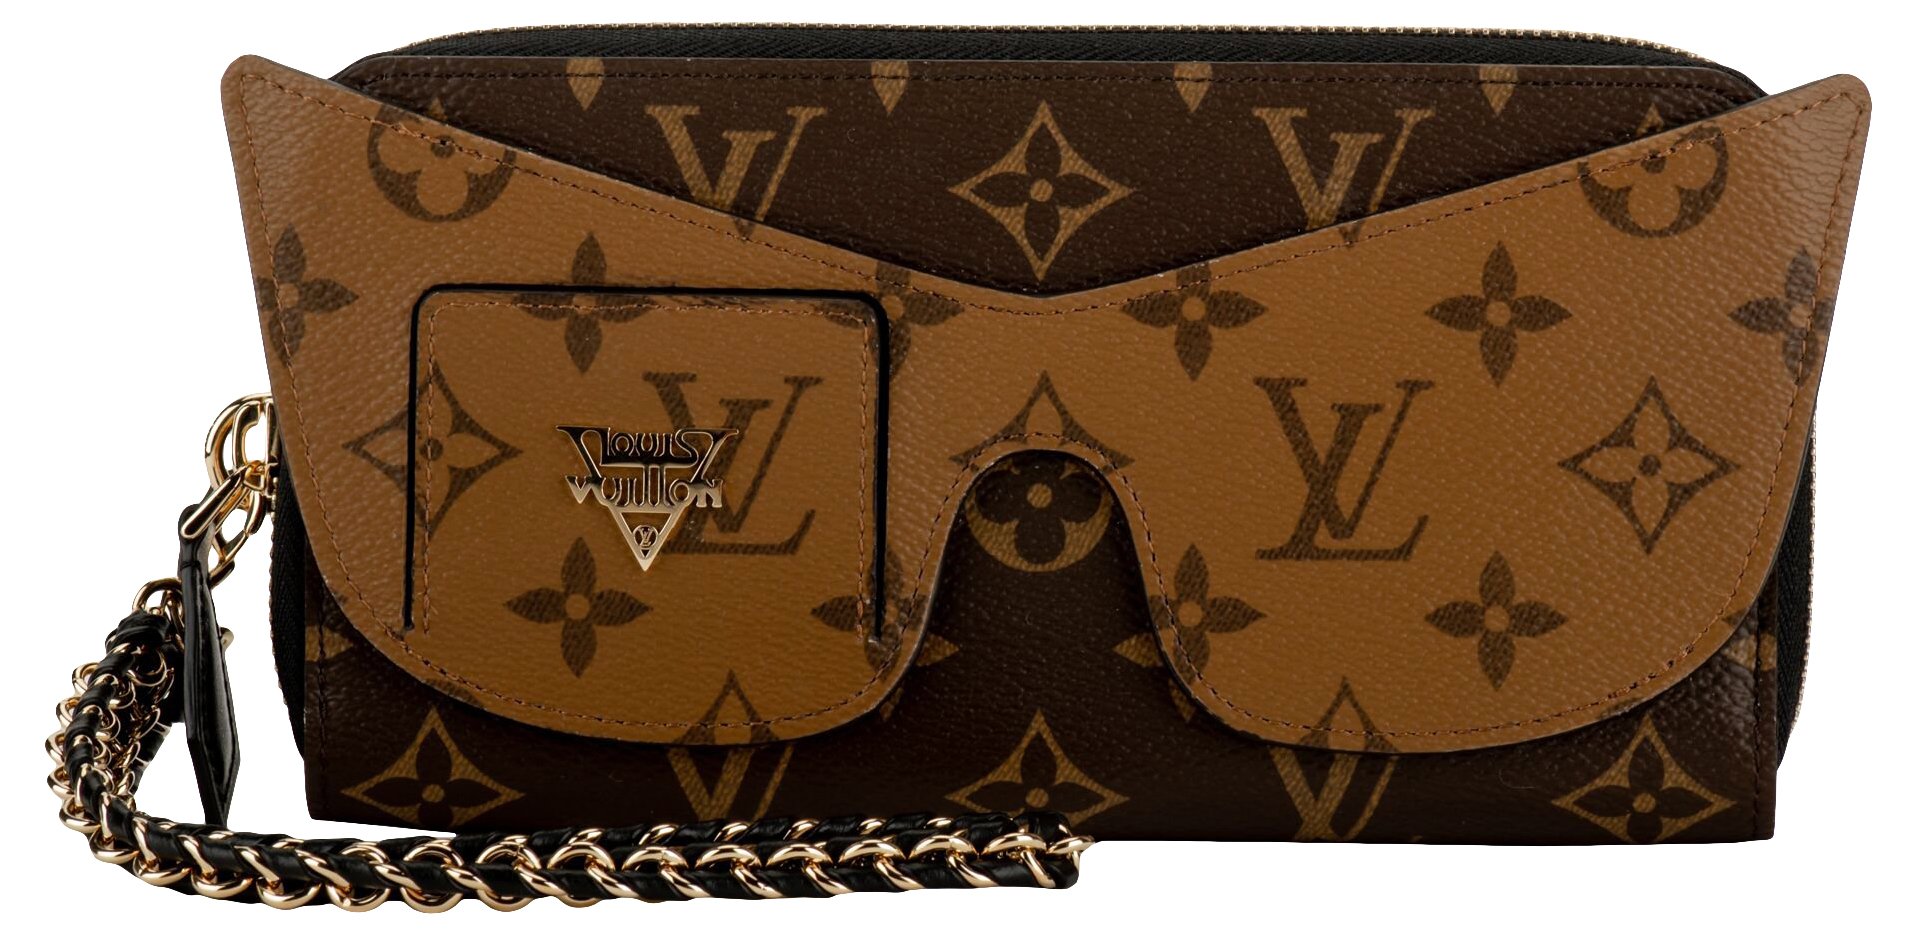 New Louis Vuitton Cruise 2020 Monogram Pouchette Bag